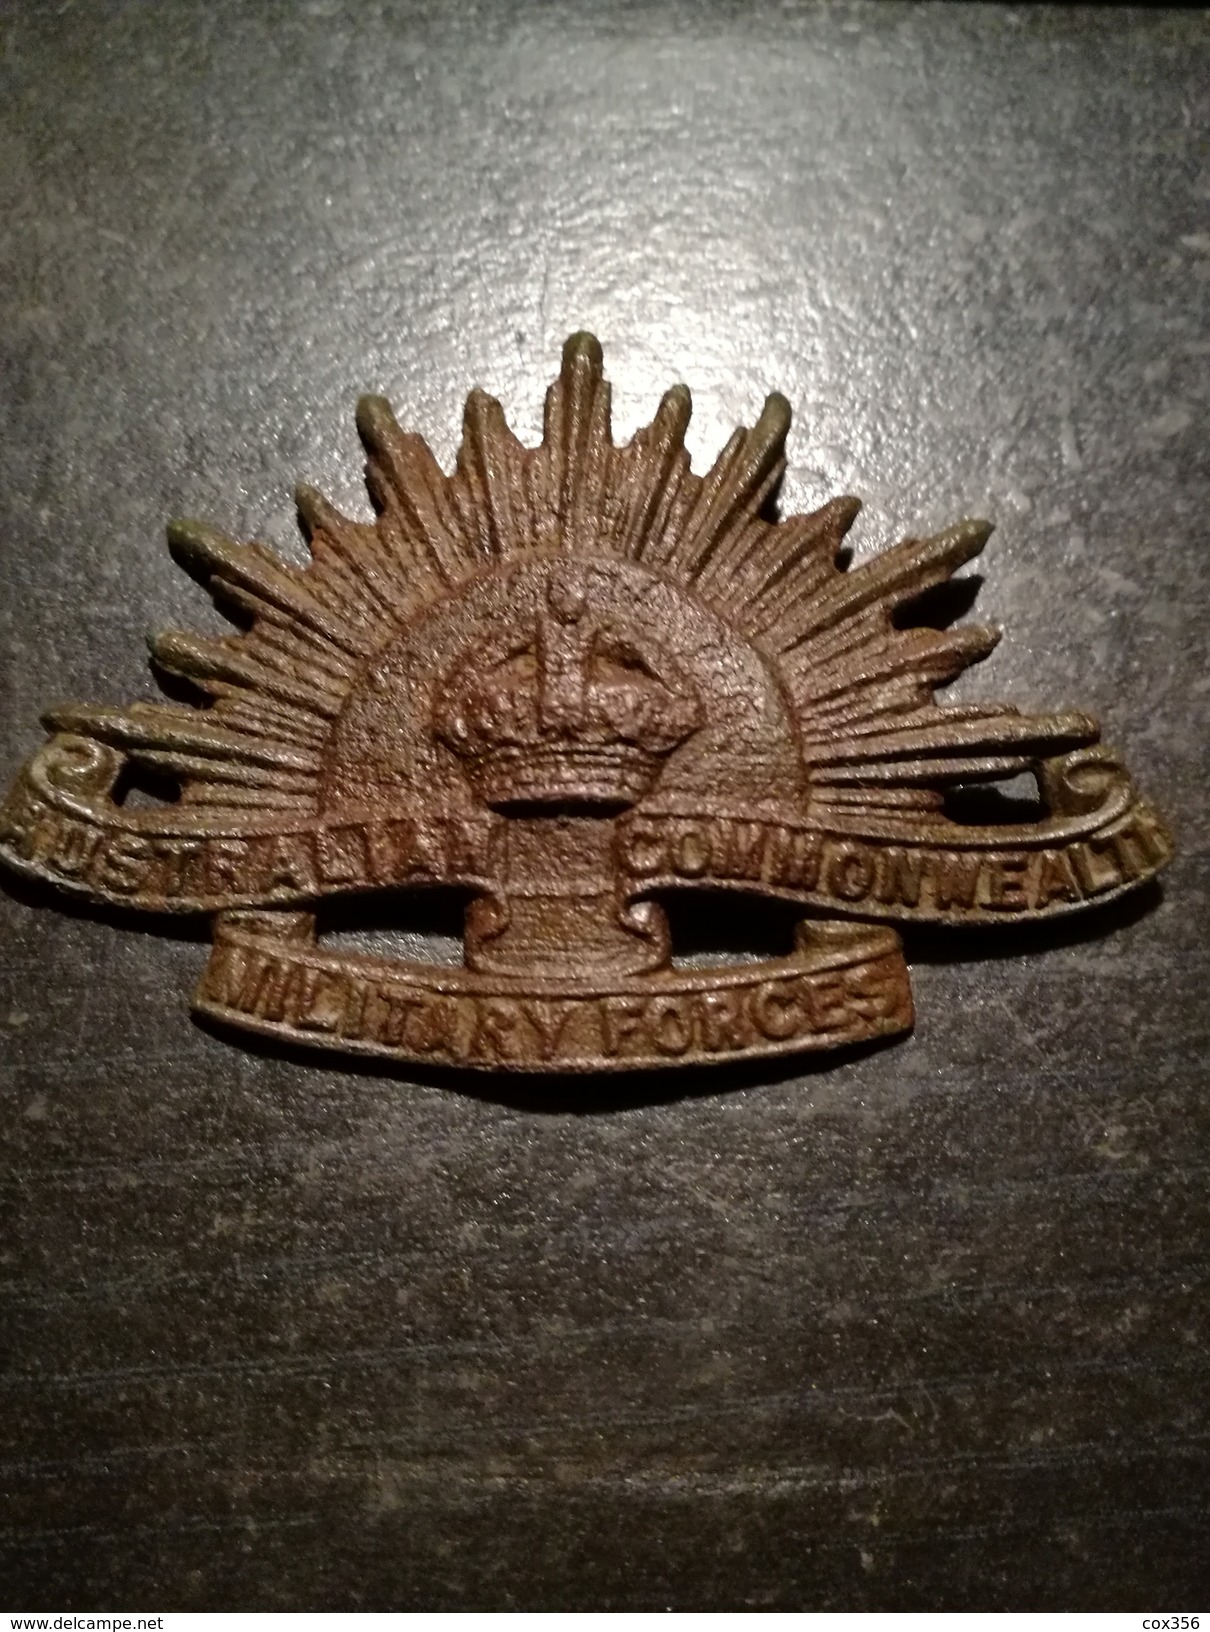 Badge Australian Commonwealth Military Forces Objet De Fouille - United Kingdom